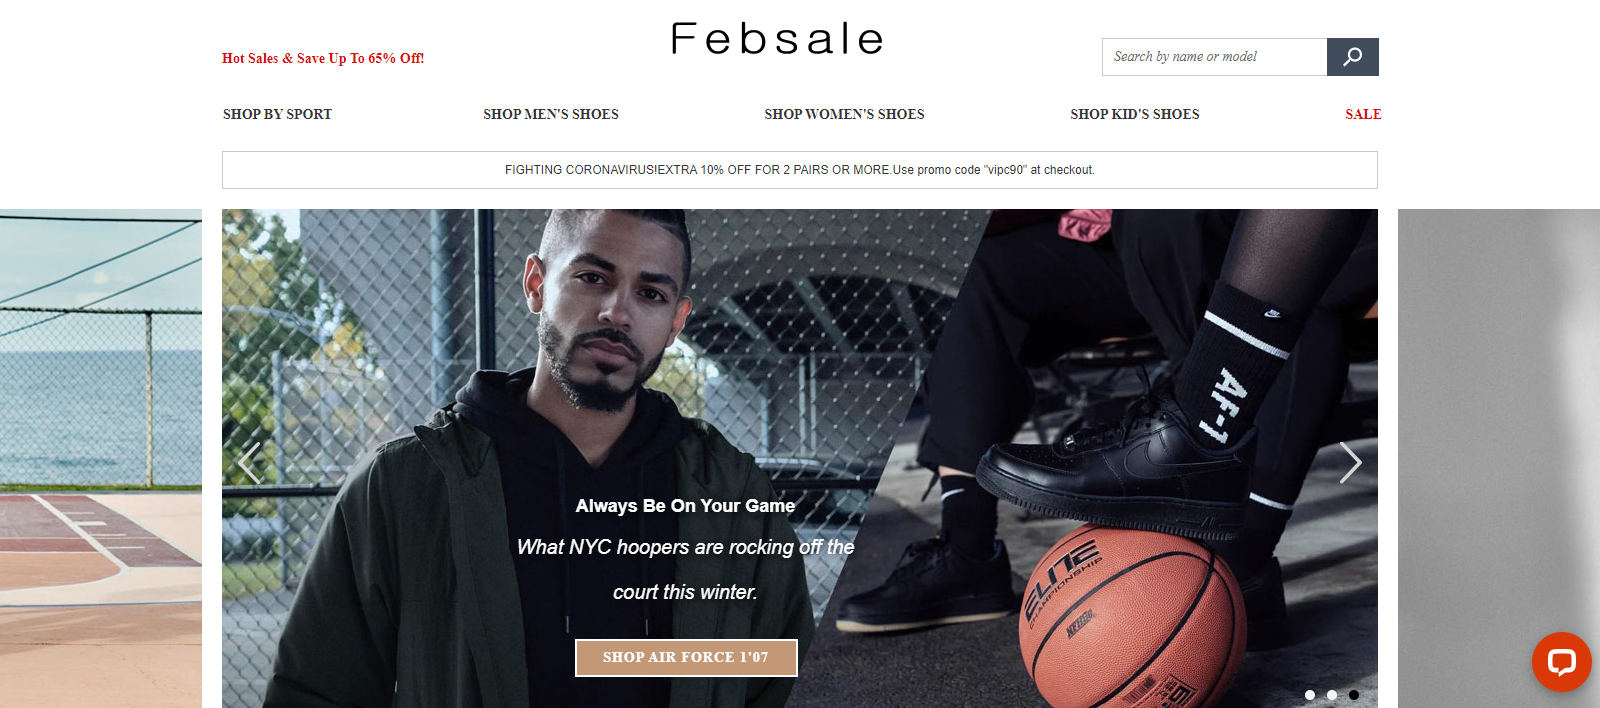 Febsale Homepage Image